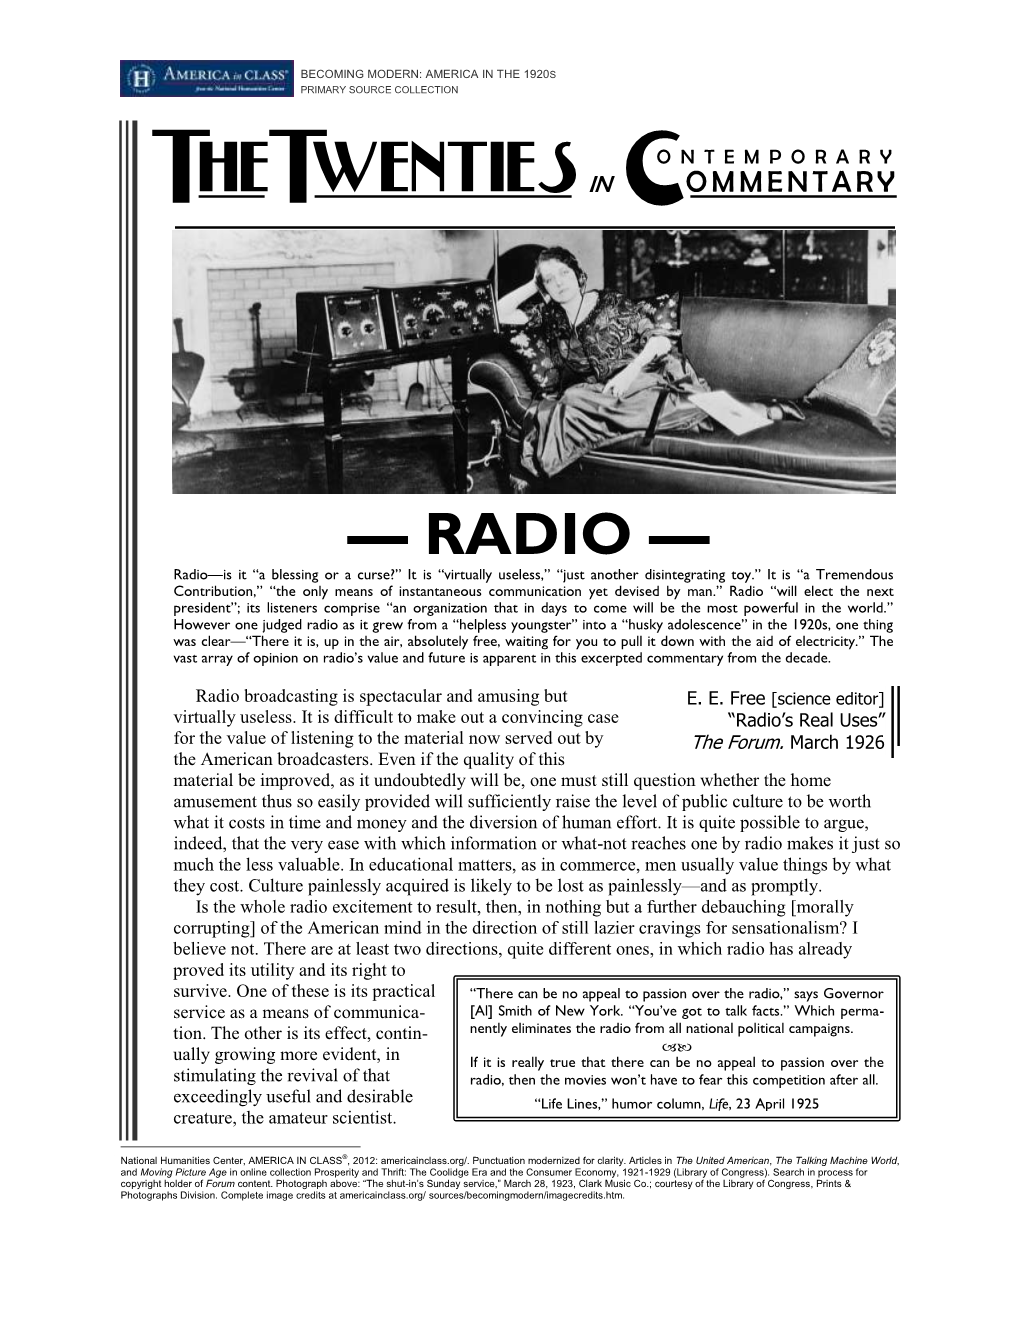 Radio in the 1920S